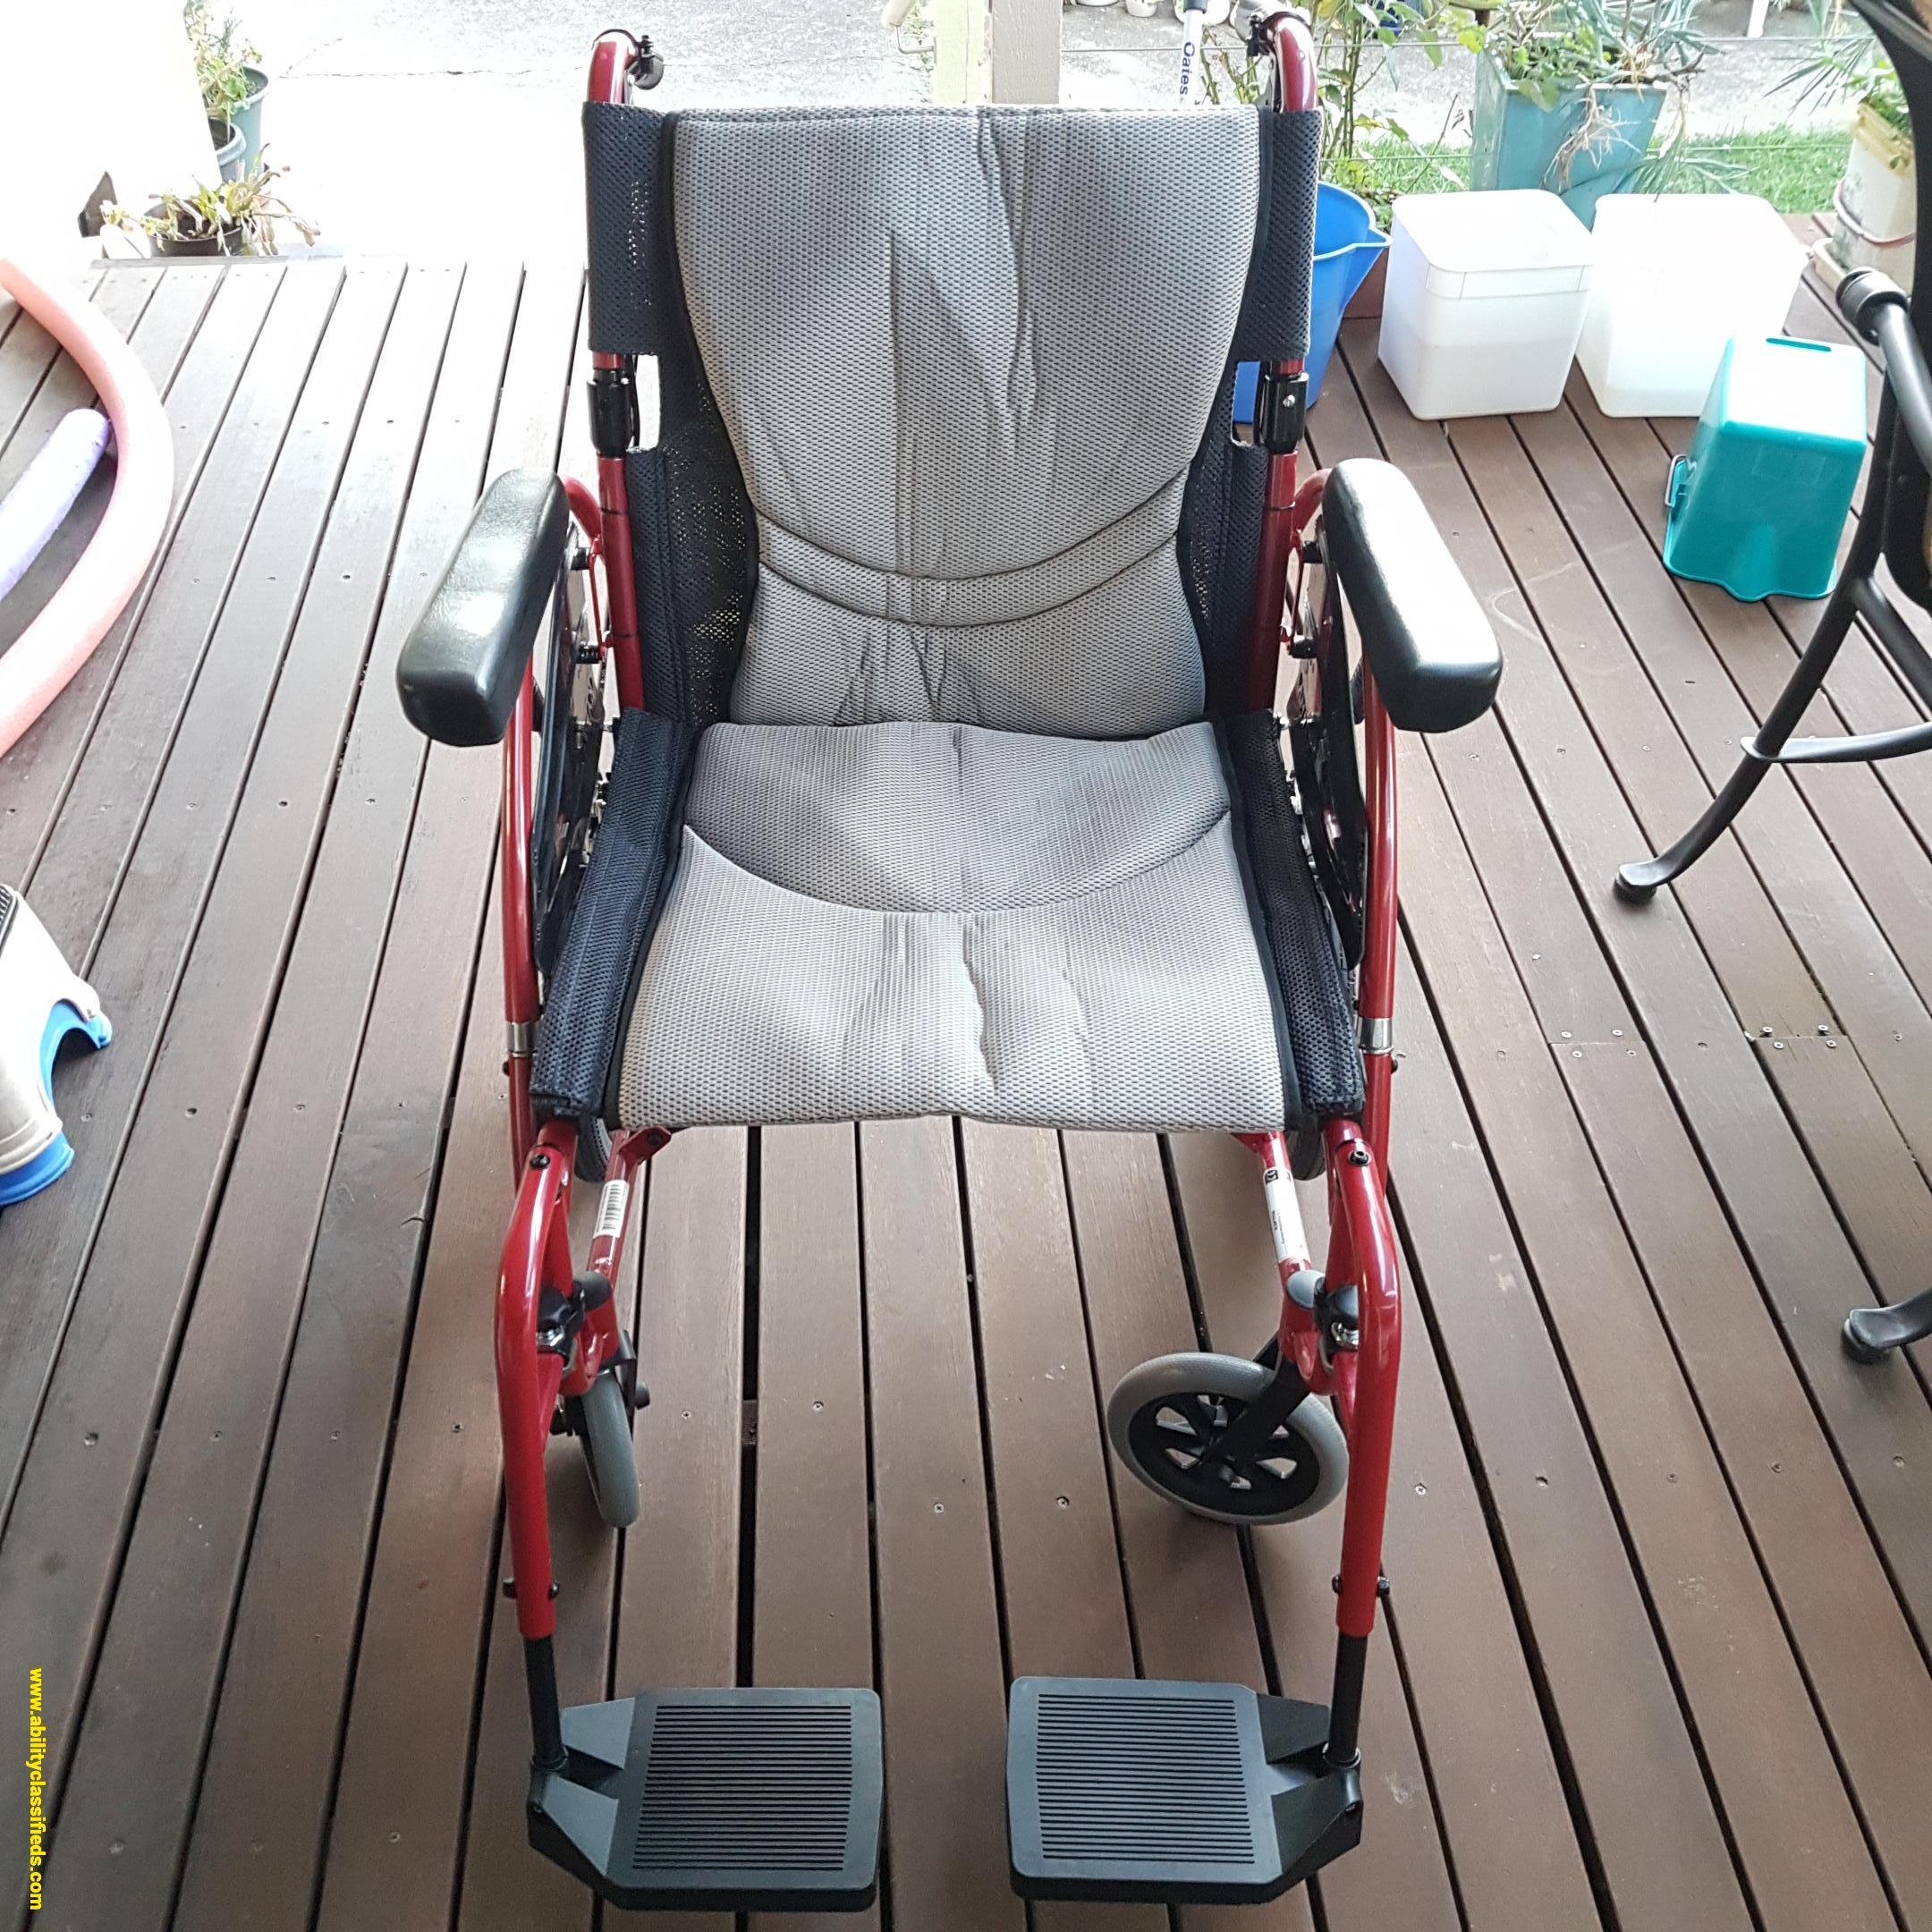 Wheelchair as new